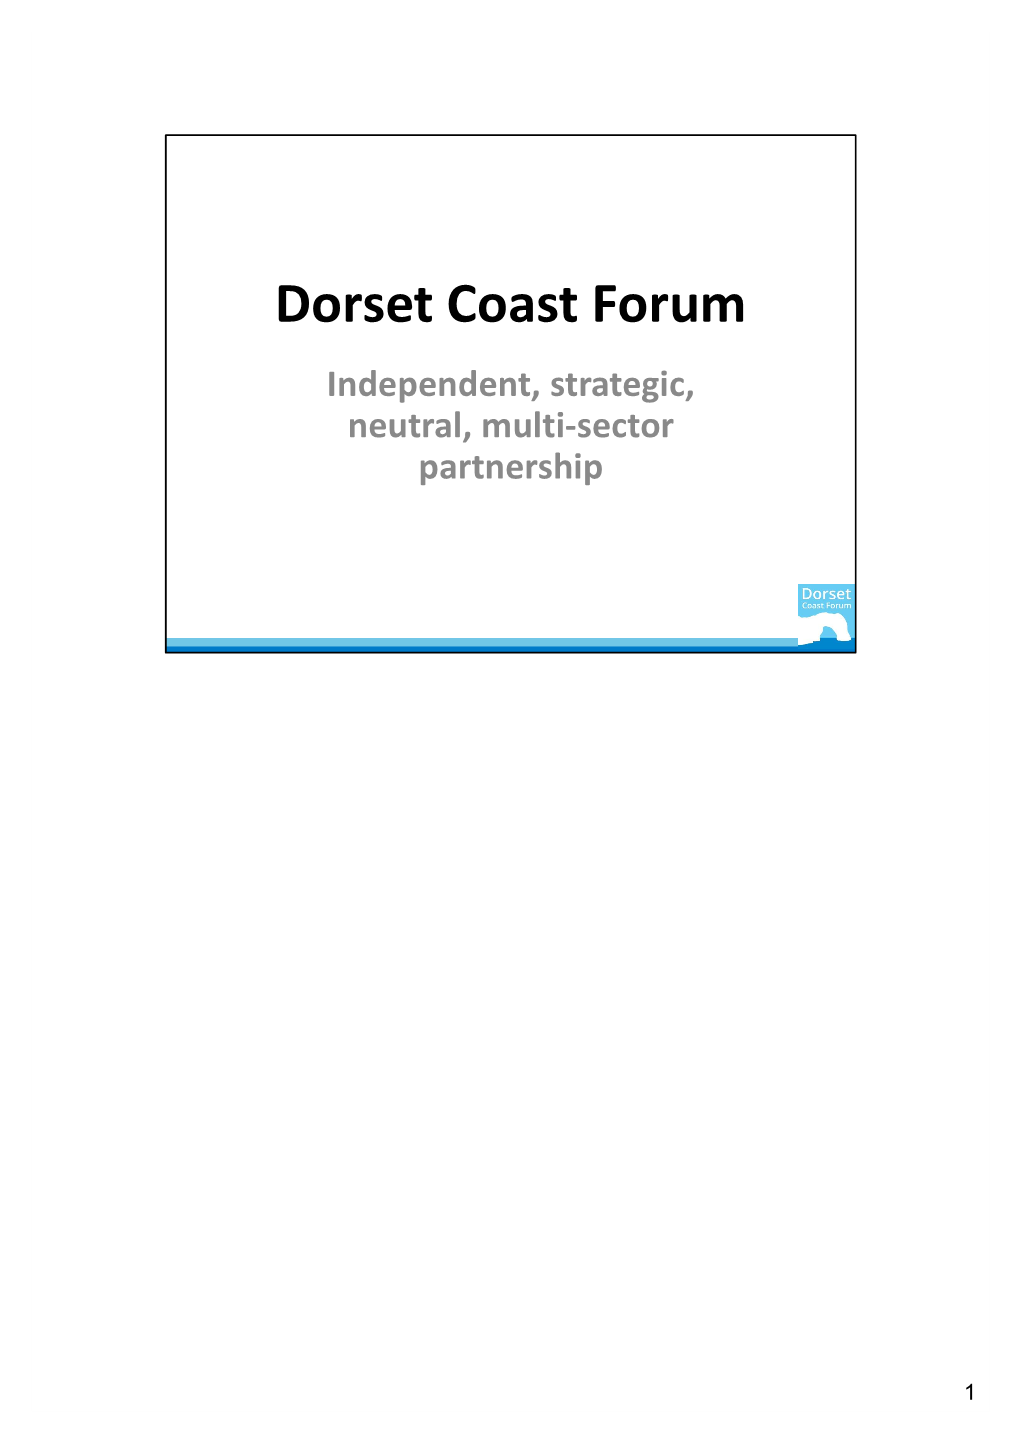 Dorset Coast Forum Independent, Strategic, Neutral, Multi-Sector Partnership